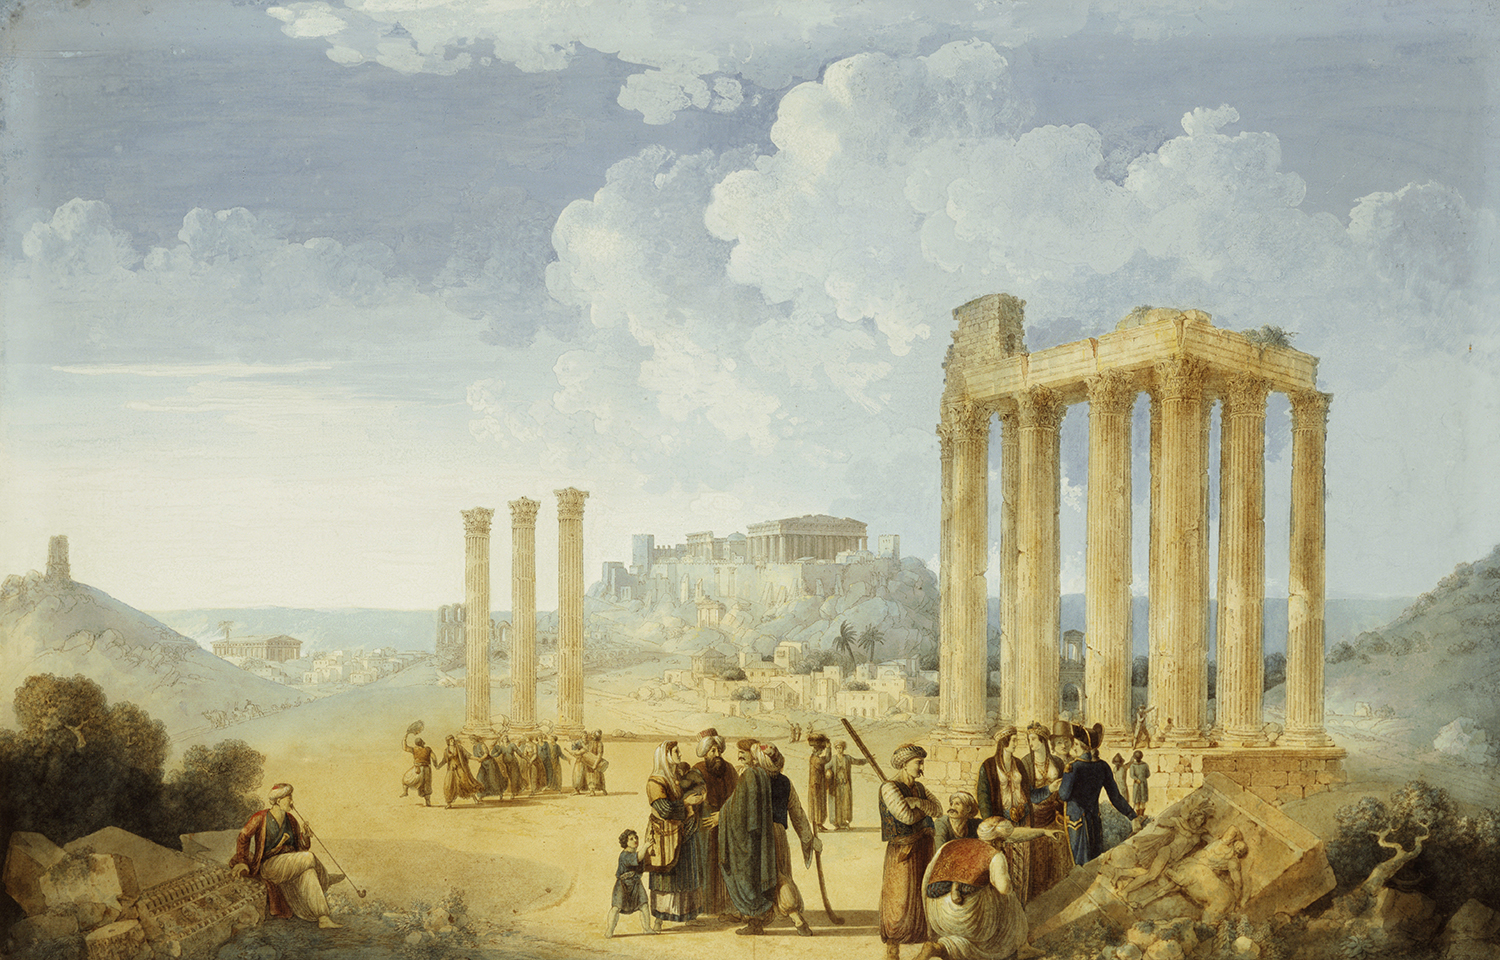 Temple of Olympian Zeus, Athens with the Acropolis in the distance, Louis-Francois Cassas, c.1800.